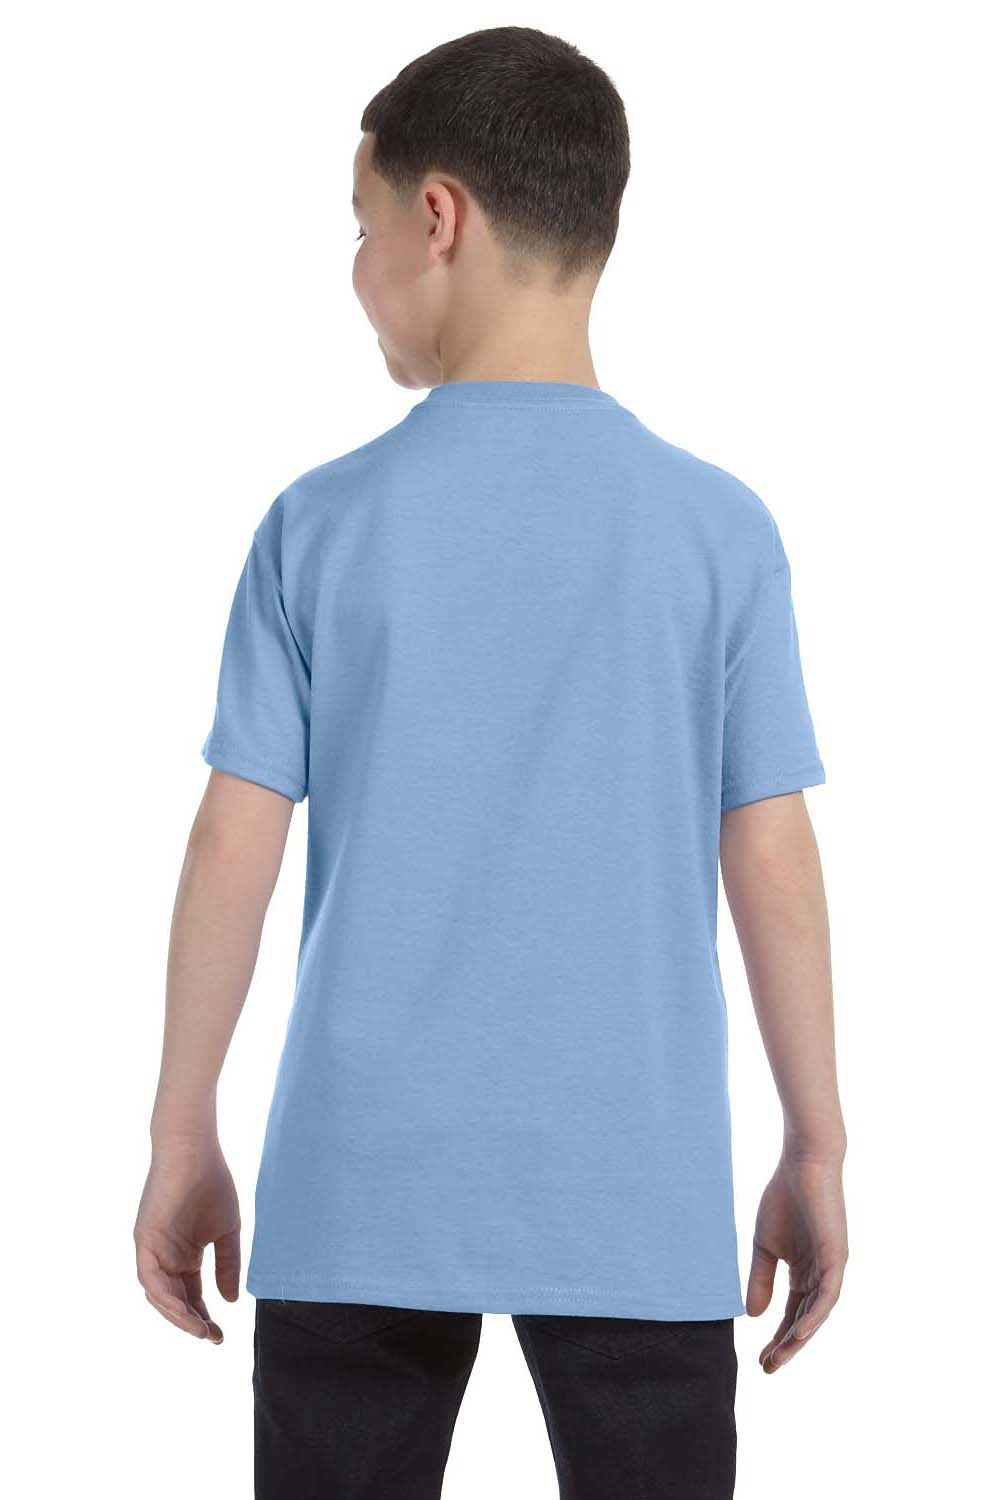 Hanes 54500 Youth ComfortSoft Short Sleeve Crewneck T-Shirt Light Blue Back